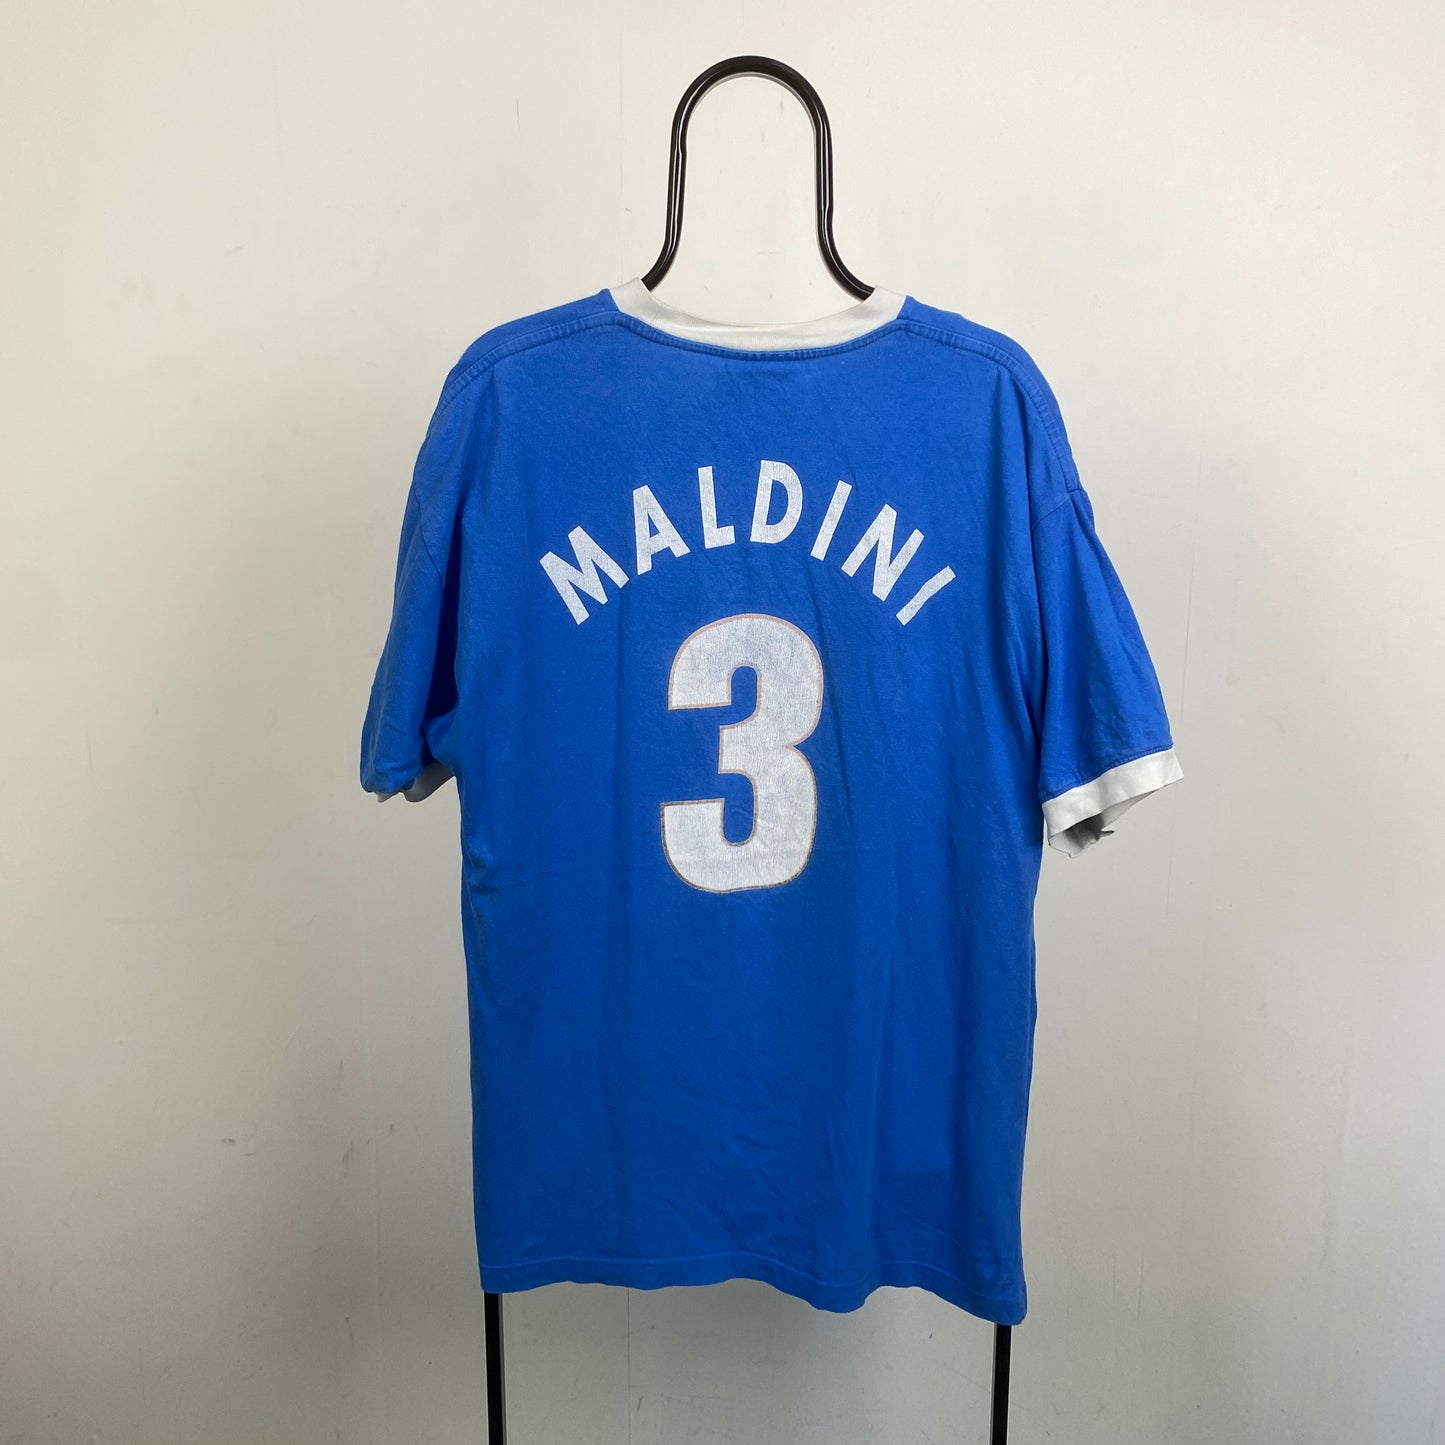 90s Nike Italy Maldini T-Shirt Blue Large